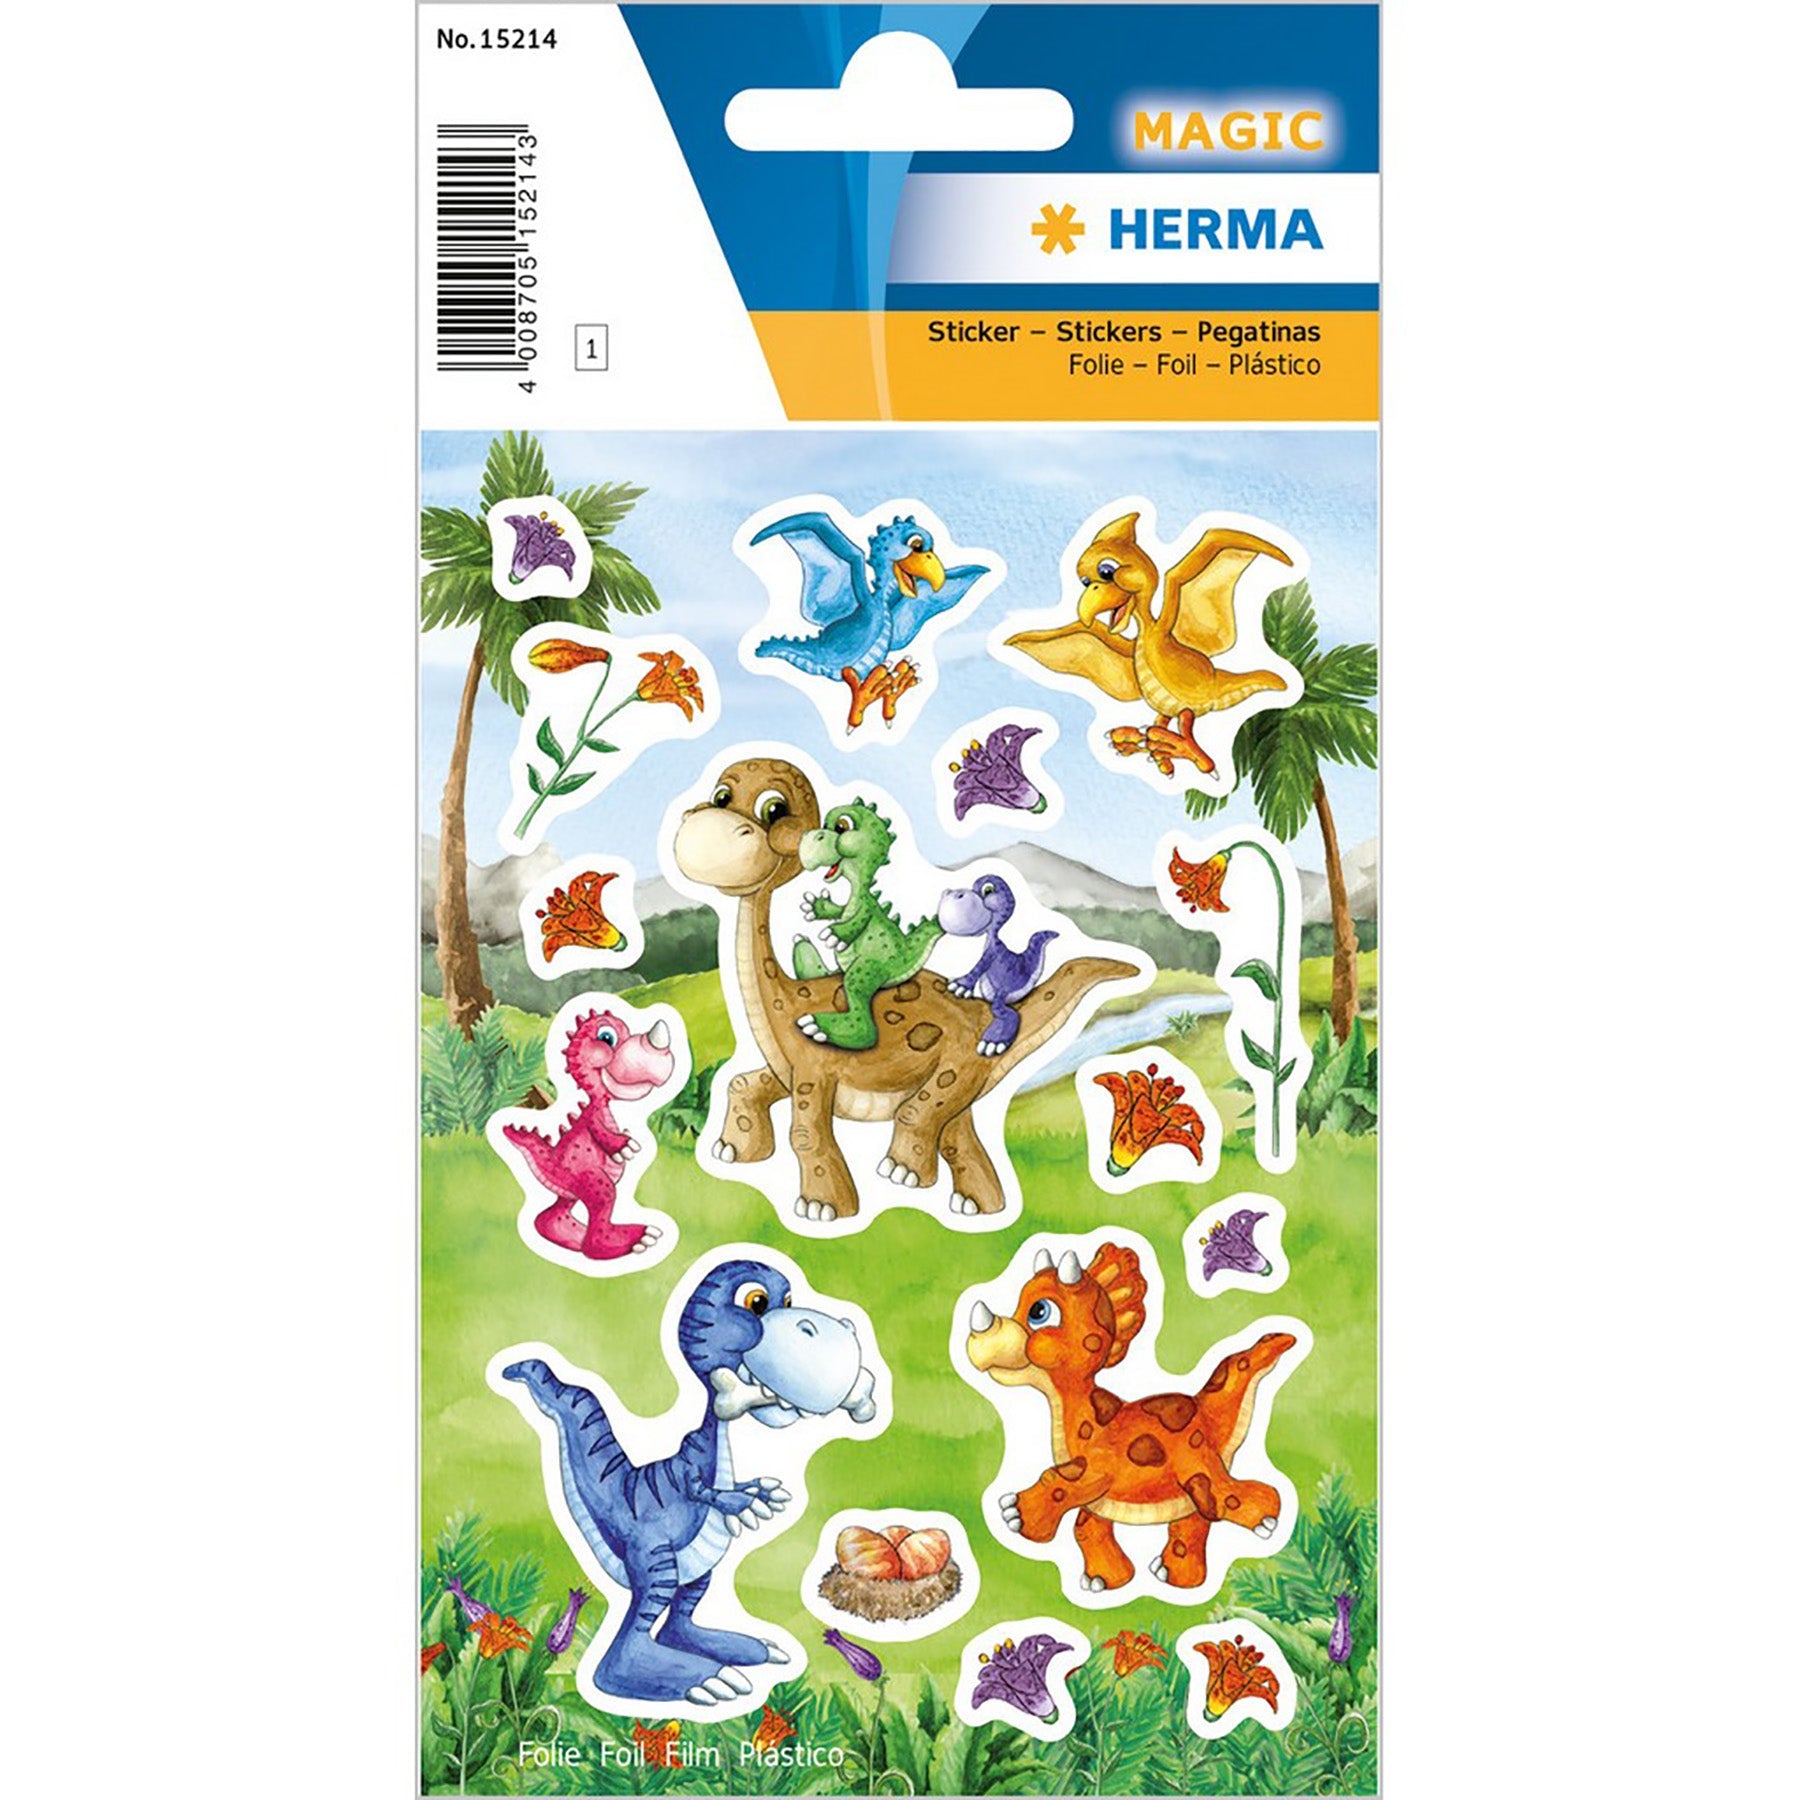 Herma Magic Stickers Dino Kids Foil 4.75x3.1in Sheet